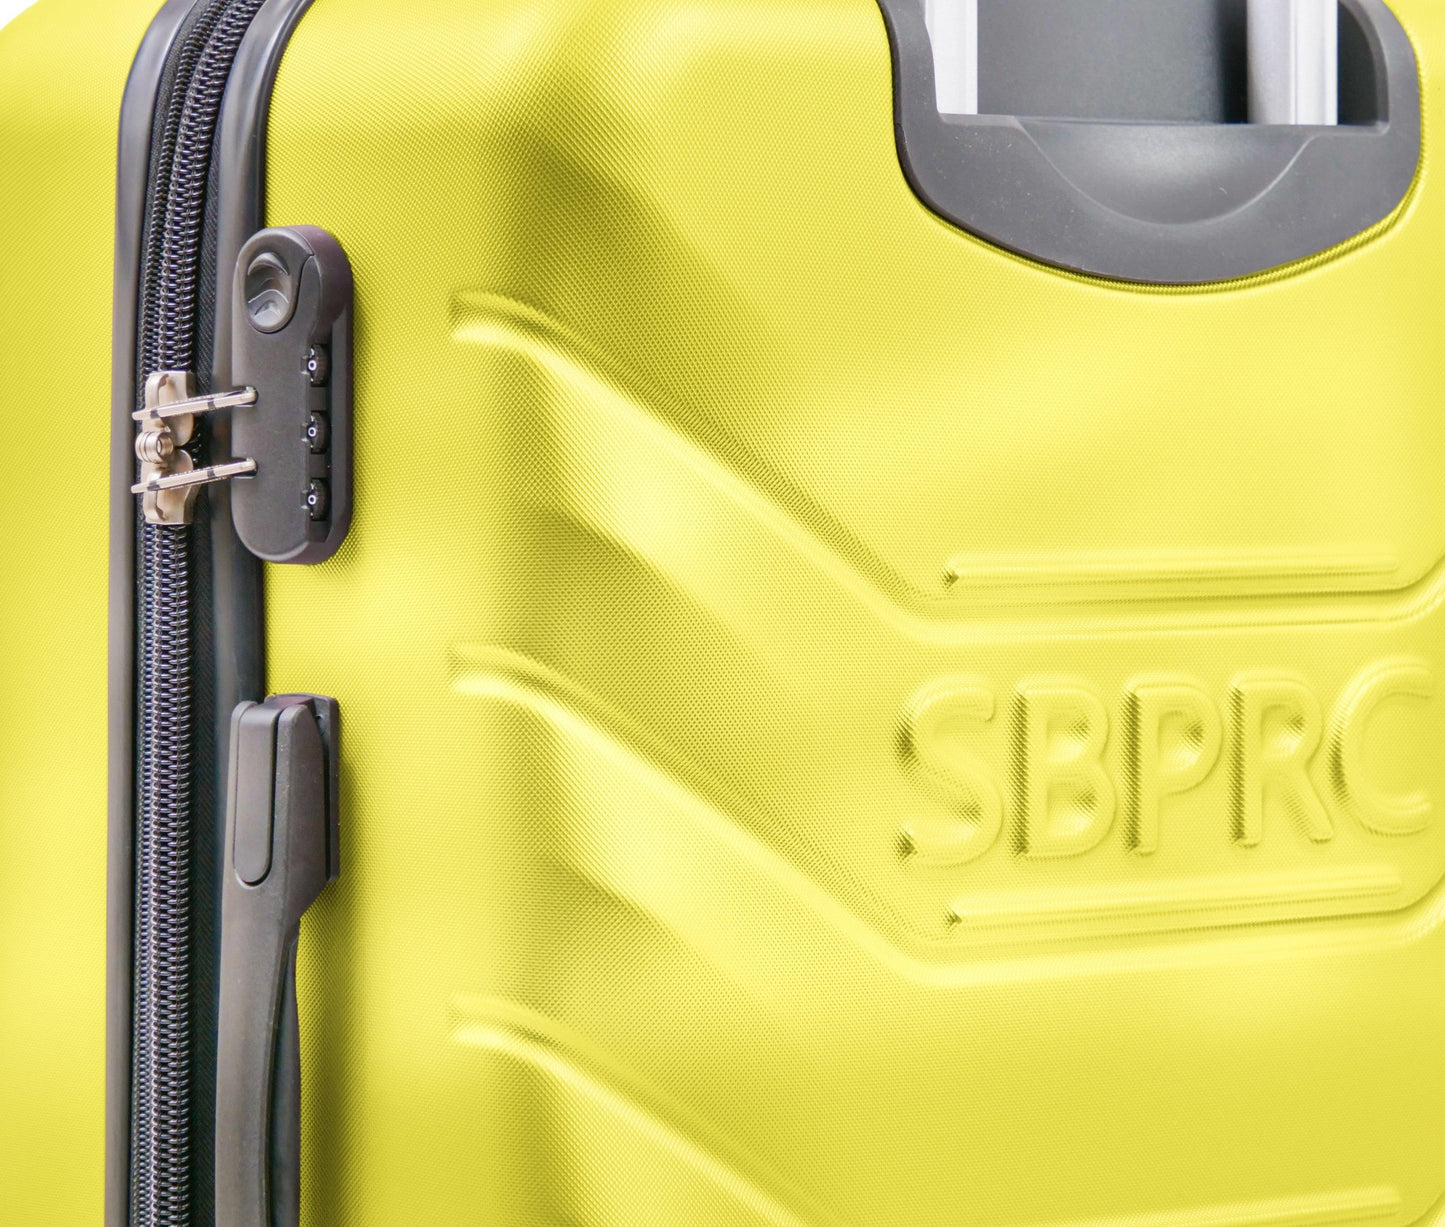 SANTA BARBARA POLO & RAQUET CLUB - מזוודה טרולי עלייה למטוס 20" דגם 1701 בצבע צהוב - MASHBIR//365